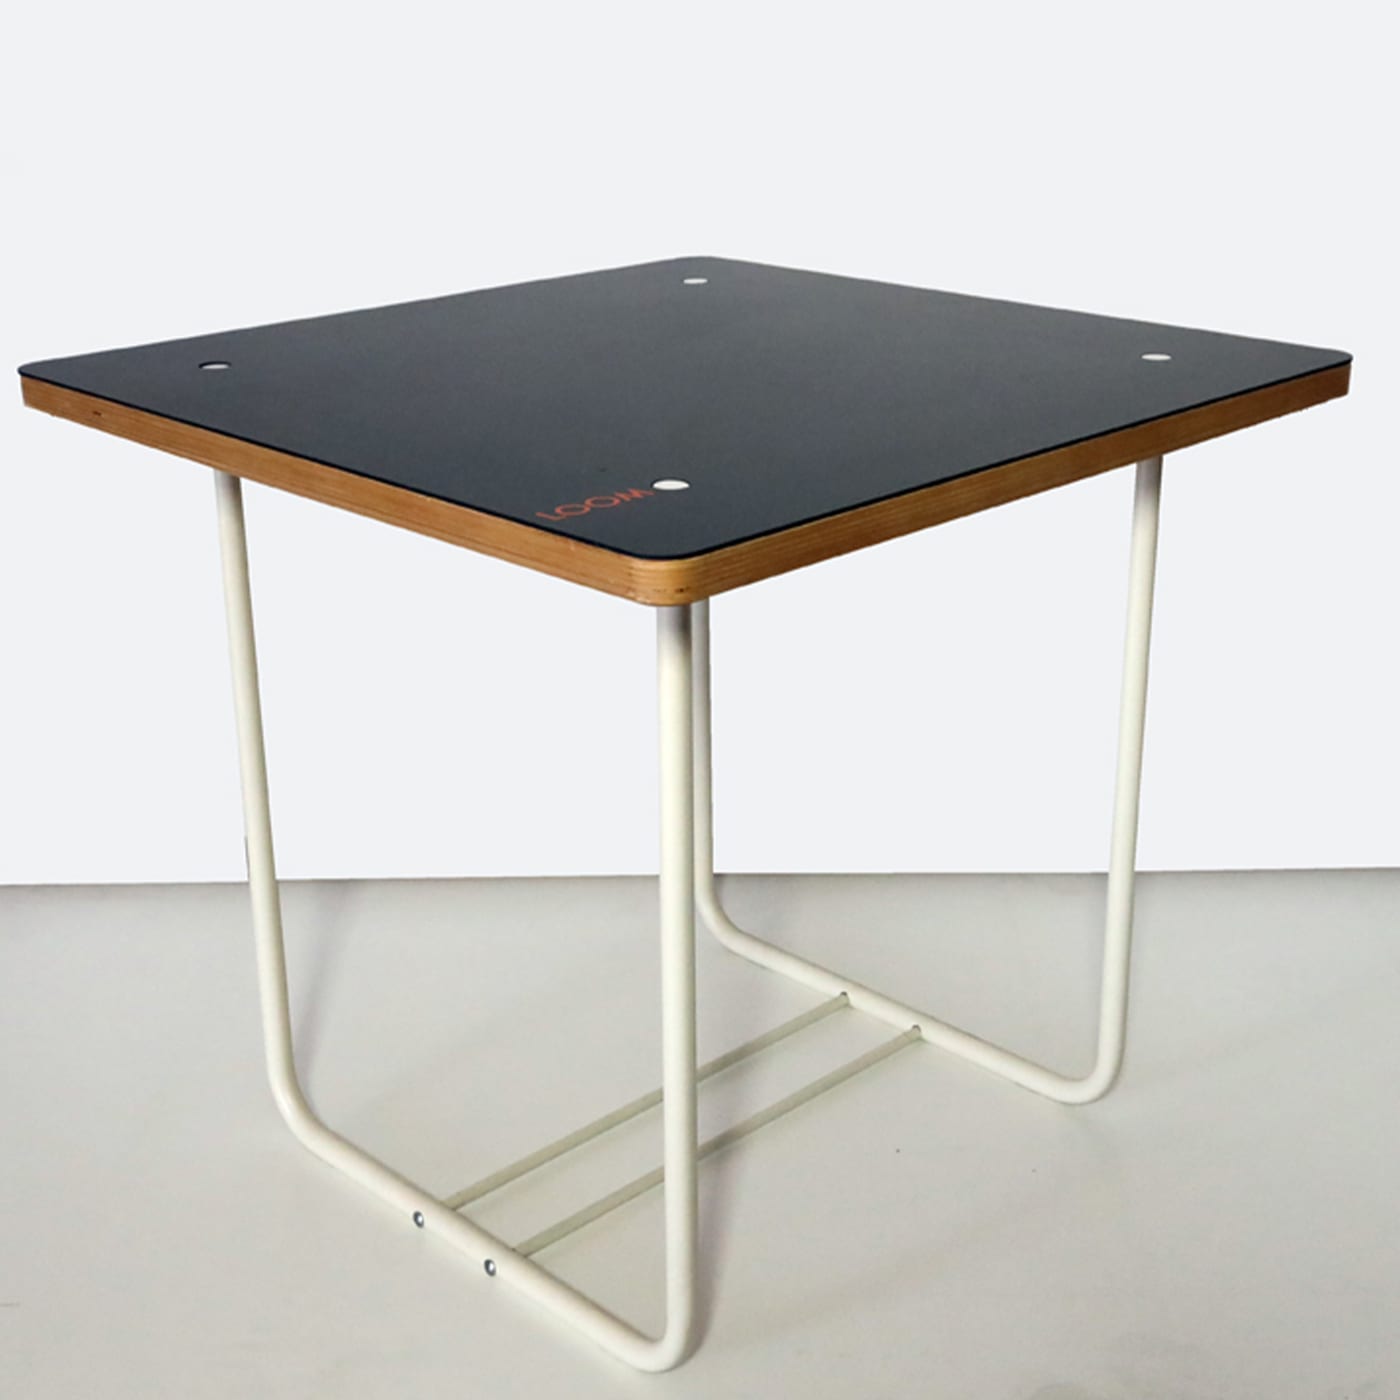  Loom Table #3 by Zatoo Design Studio - L'Artigiana - Poligoni Design